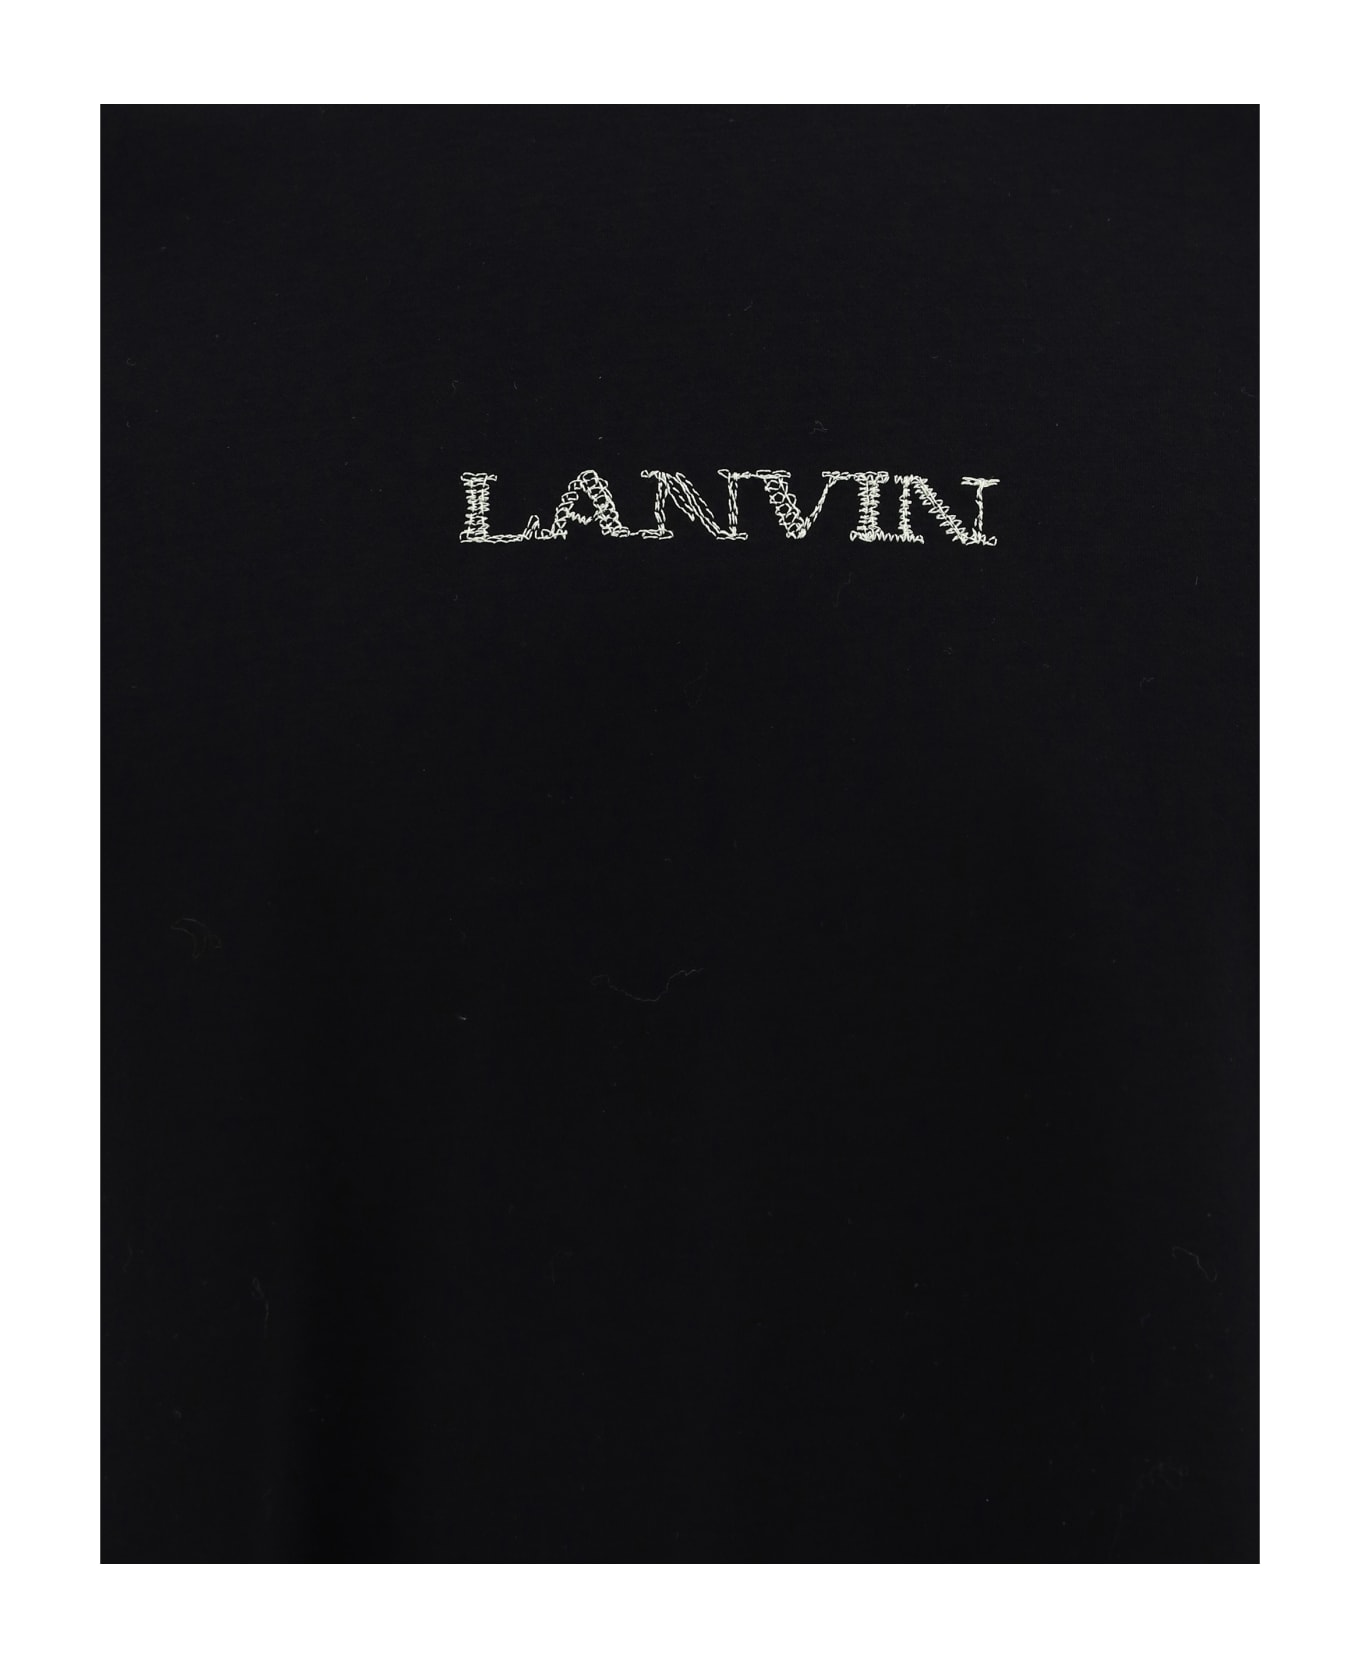 Lanvin T-shirt - Black